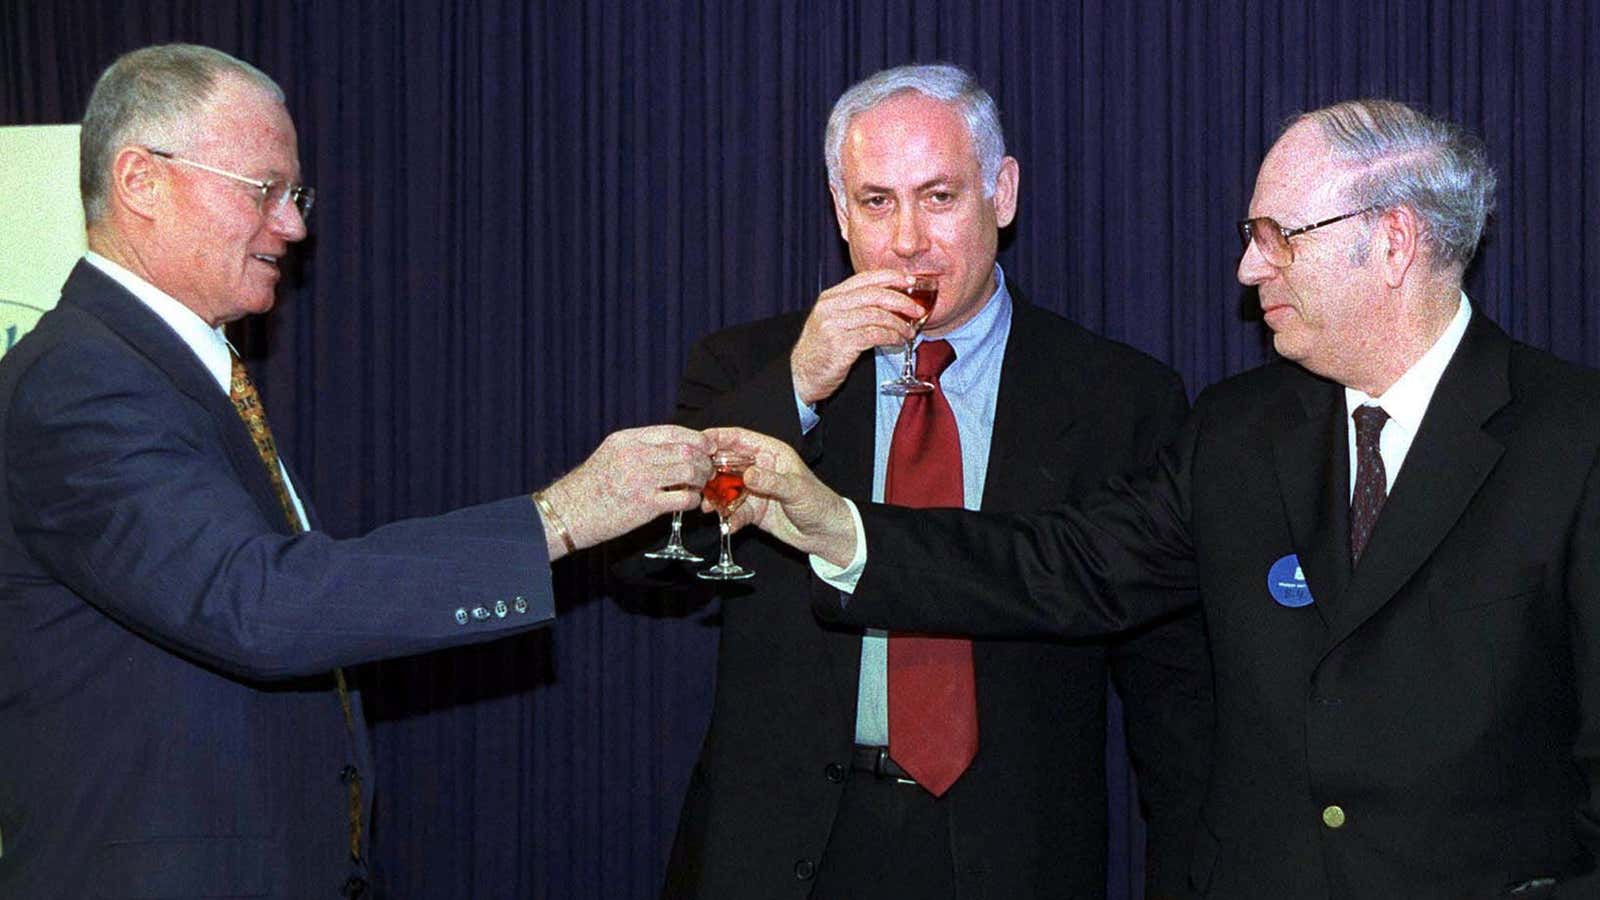 Efraim Halevy (R) toasts his Mossad predecessor, Danny Yatom (L), along with Israeli prime minister Benjamin Netanyahu.